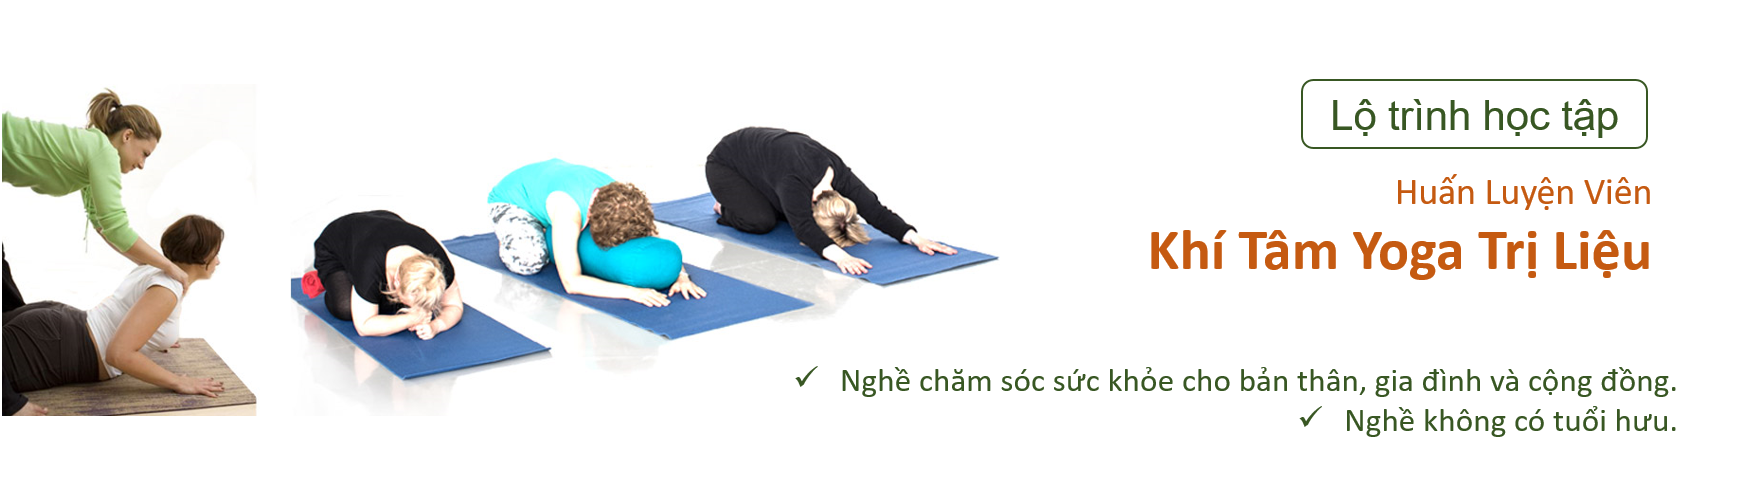 banner-lo-trinh-khi-tam-yoga-tri-lieu